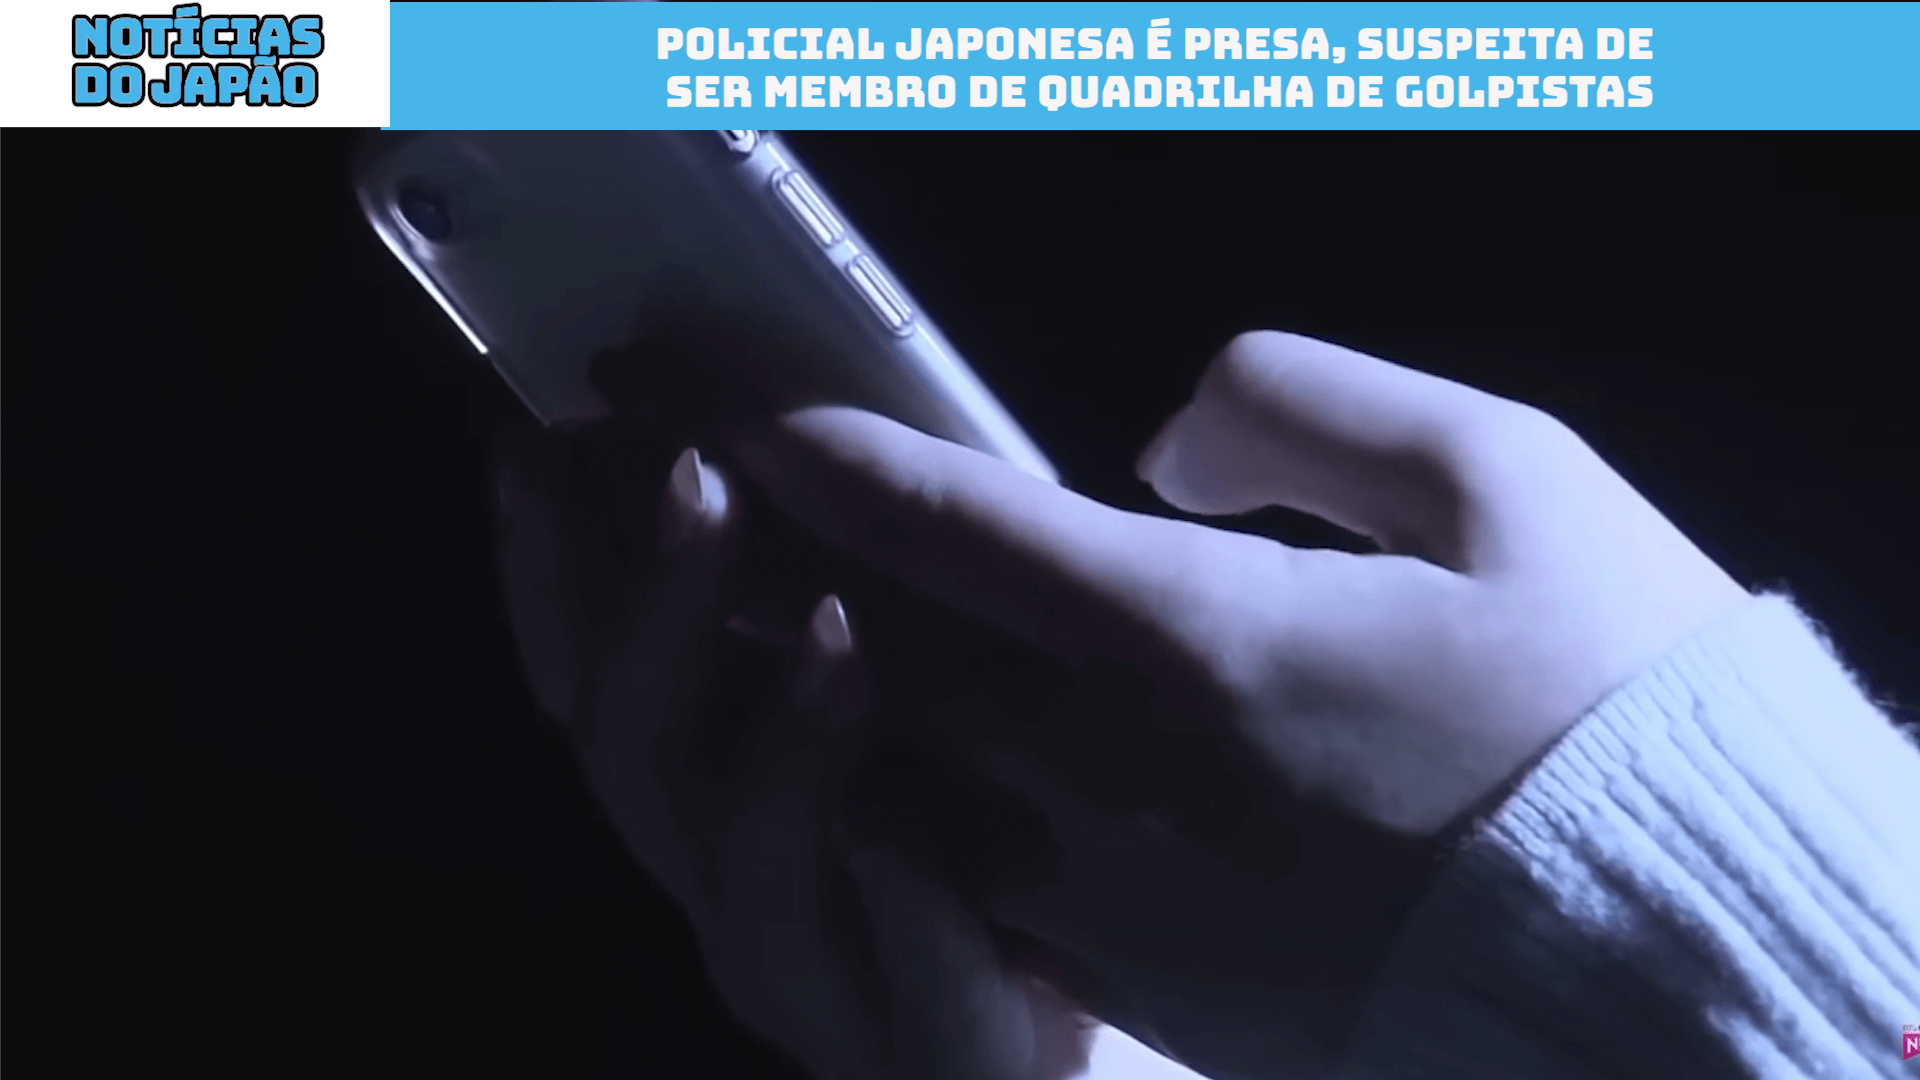 Policial japonesa é presa, suspeita de ser membro de quadrilha de golpistas